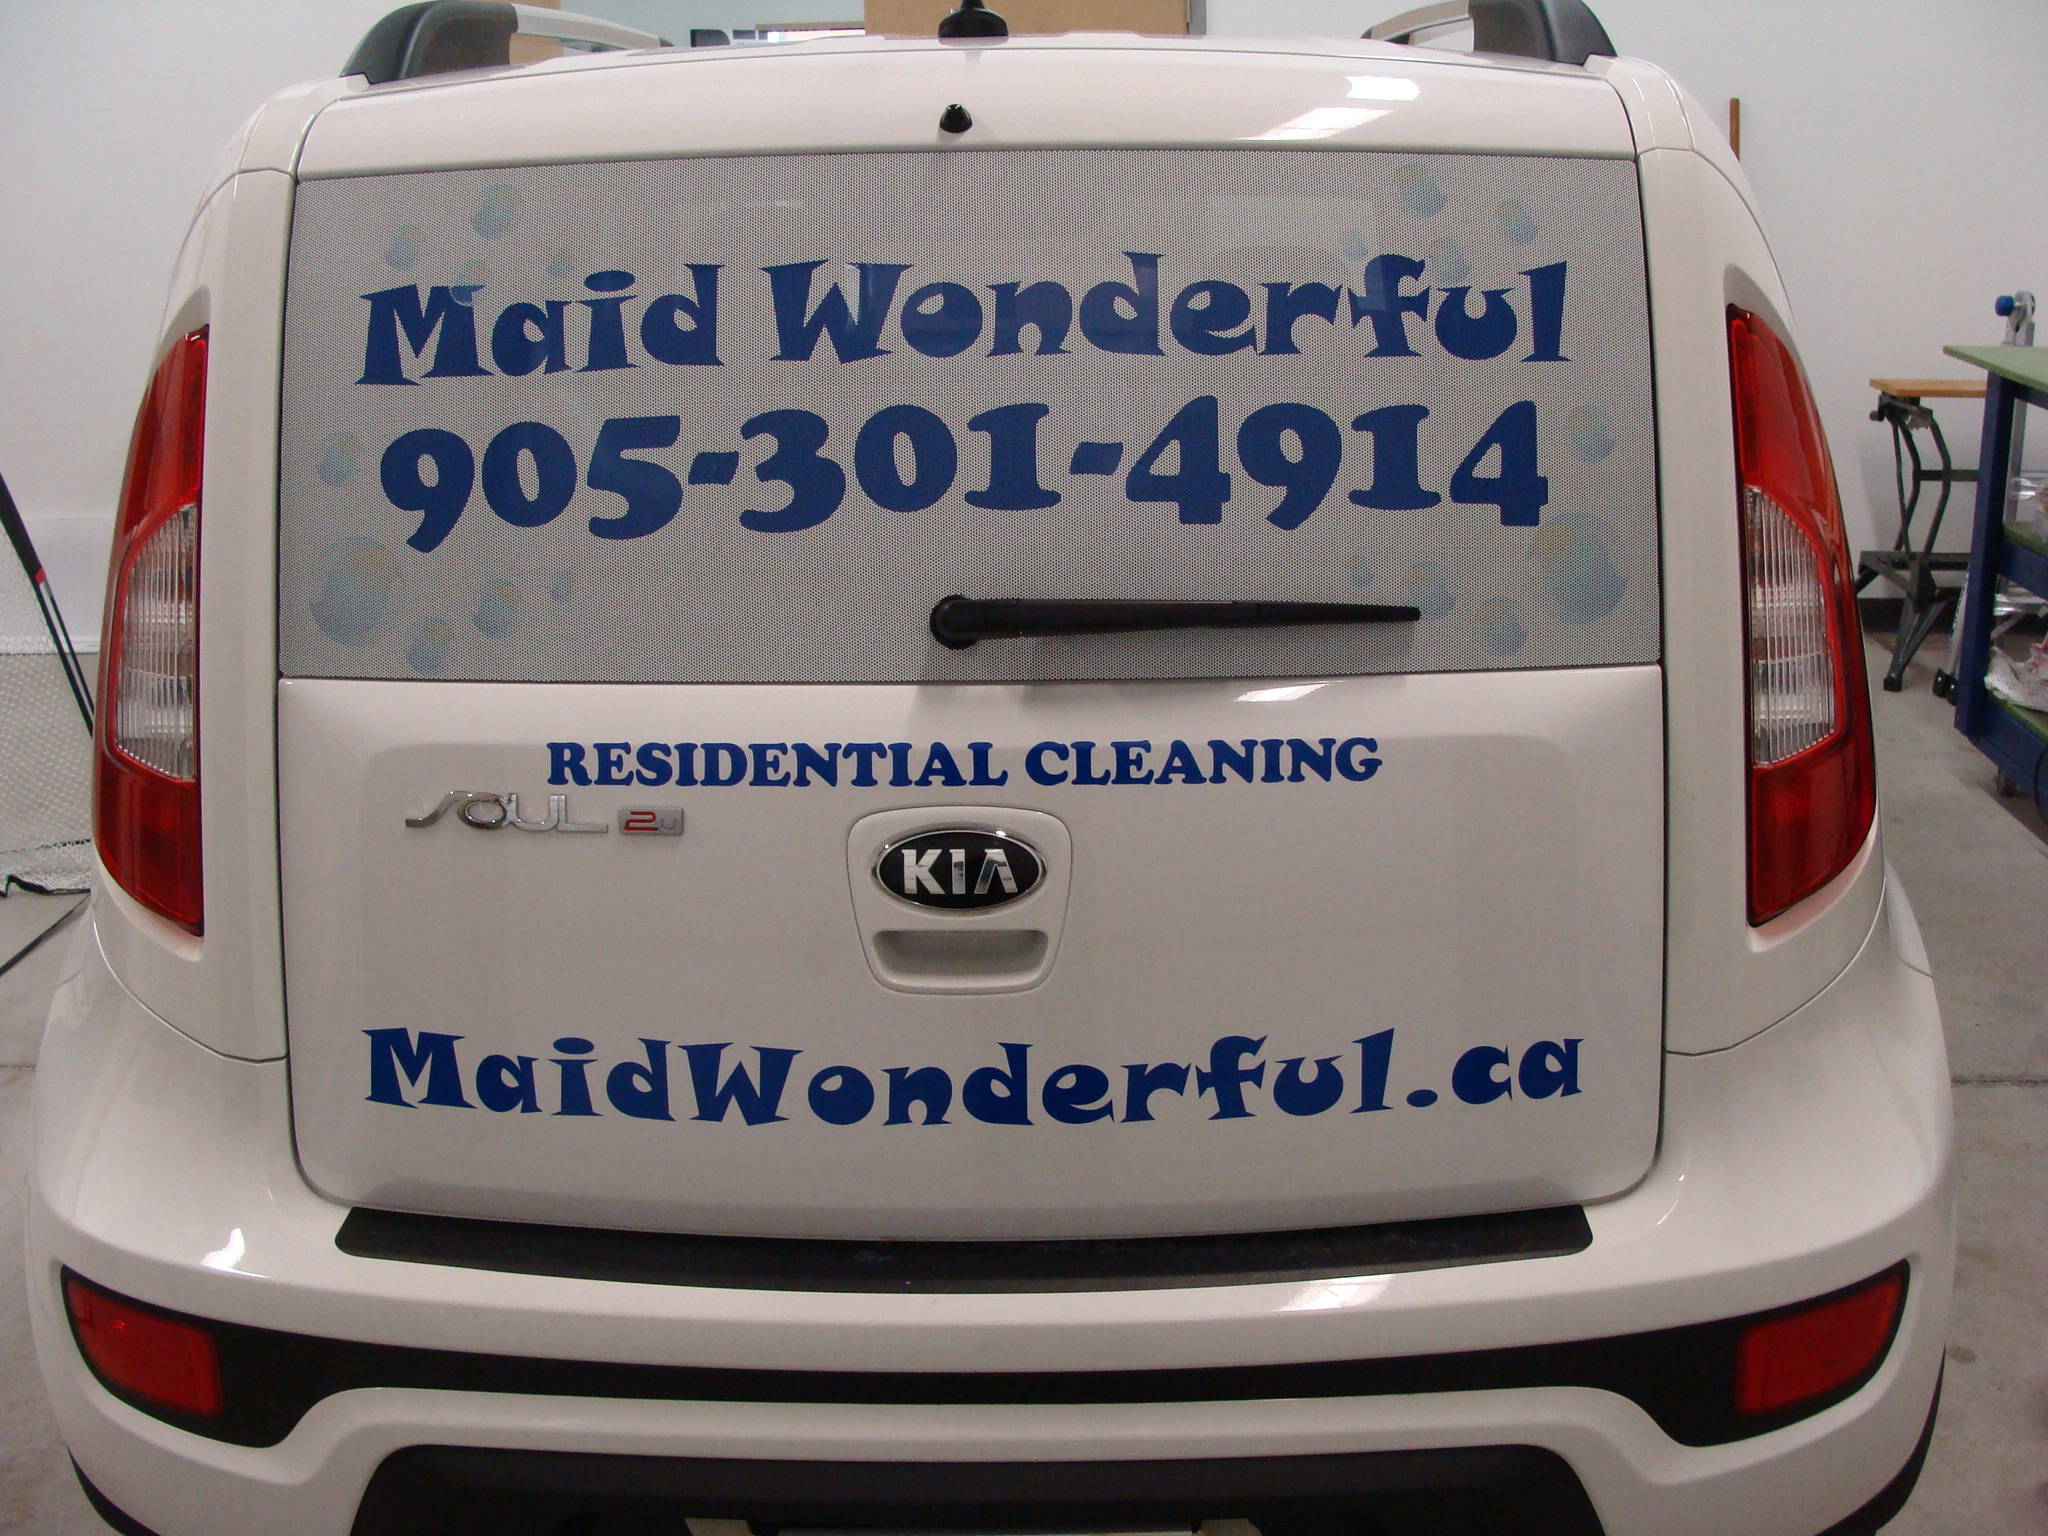 Vehicle Graphics for Maid Wonderful